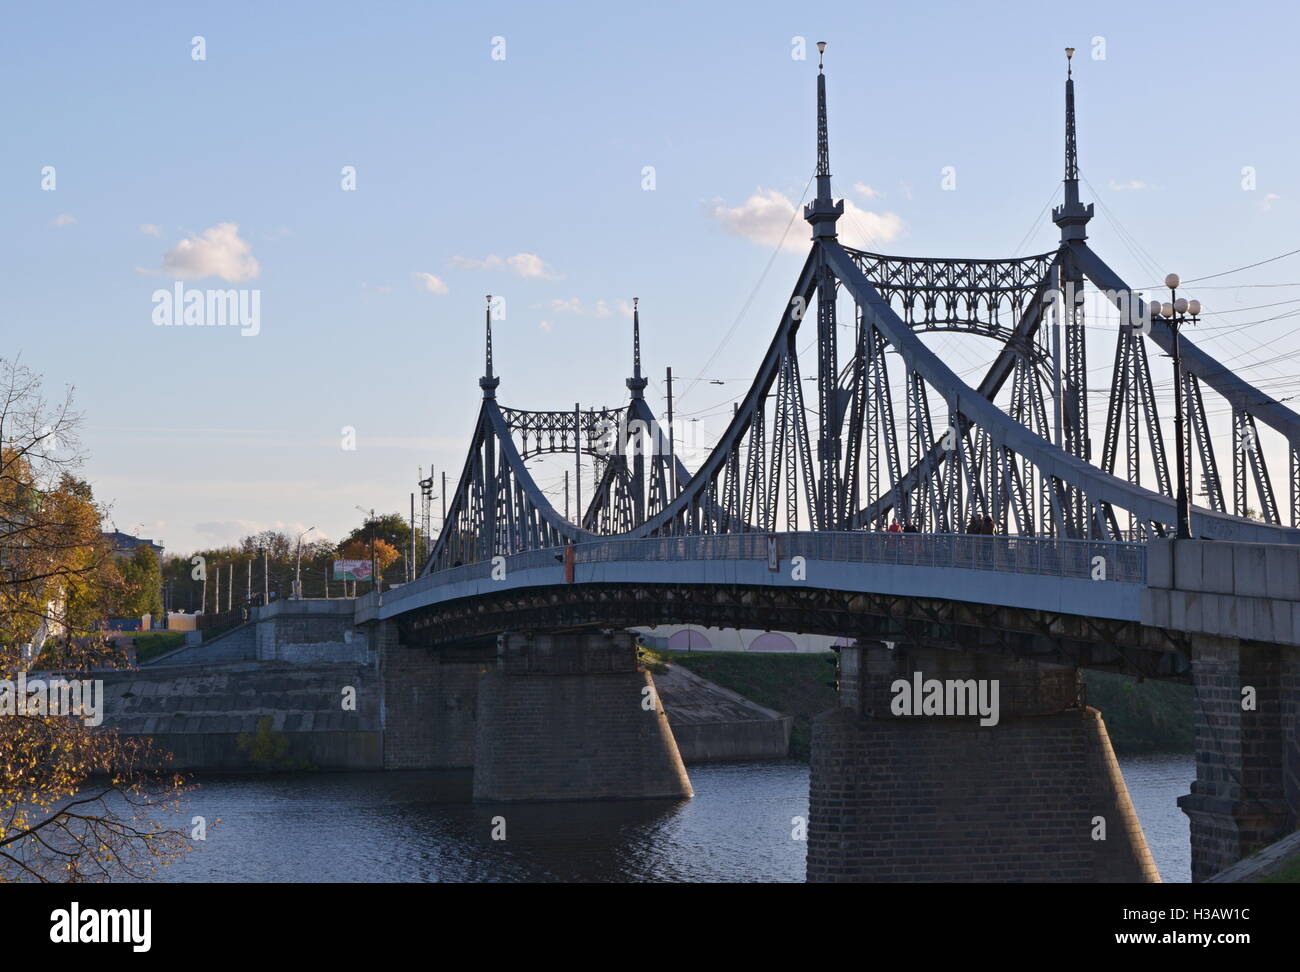 The old Volga bridge in Tver, Russia Stock Photo